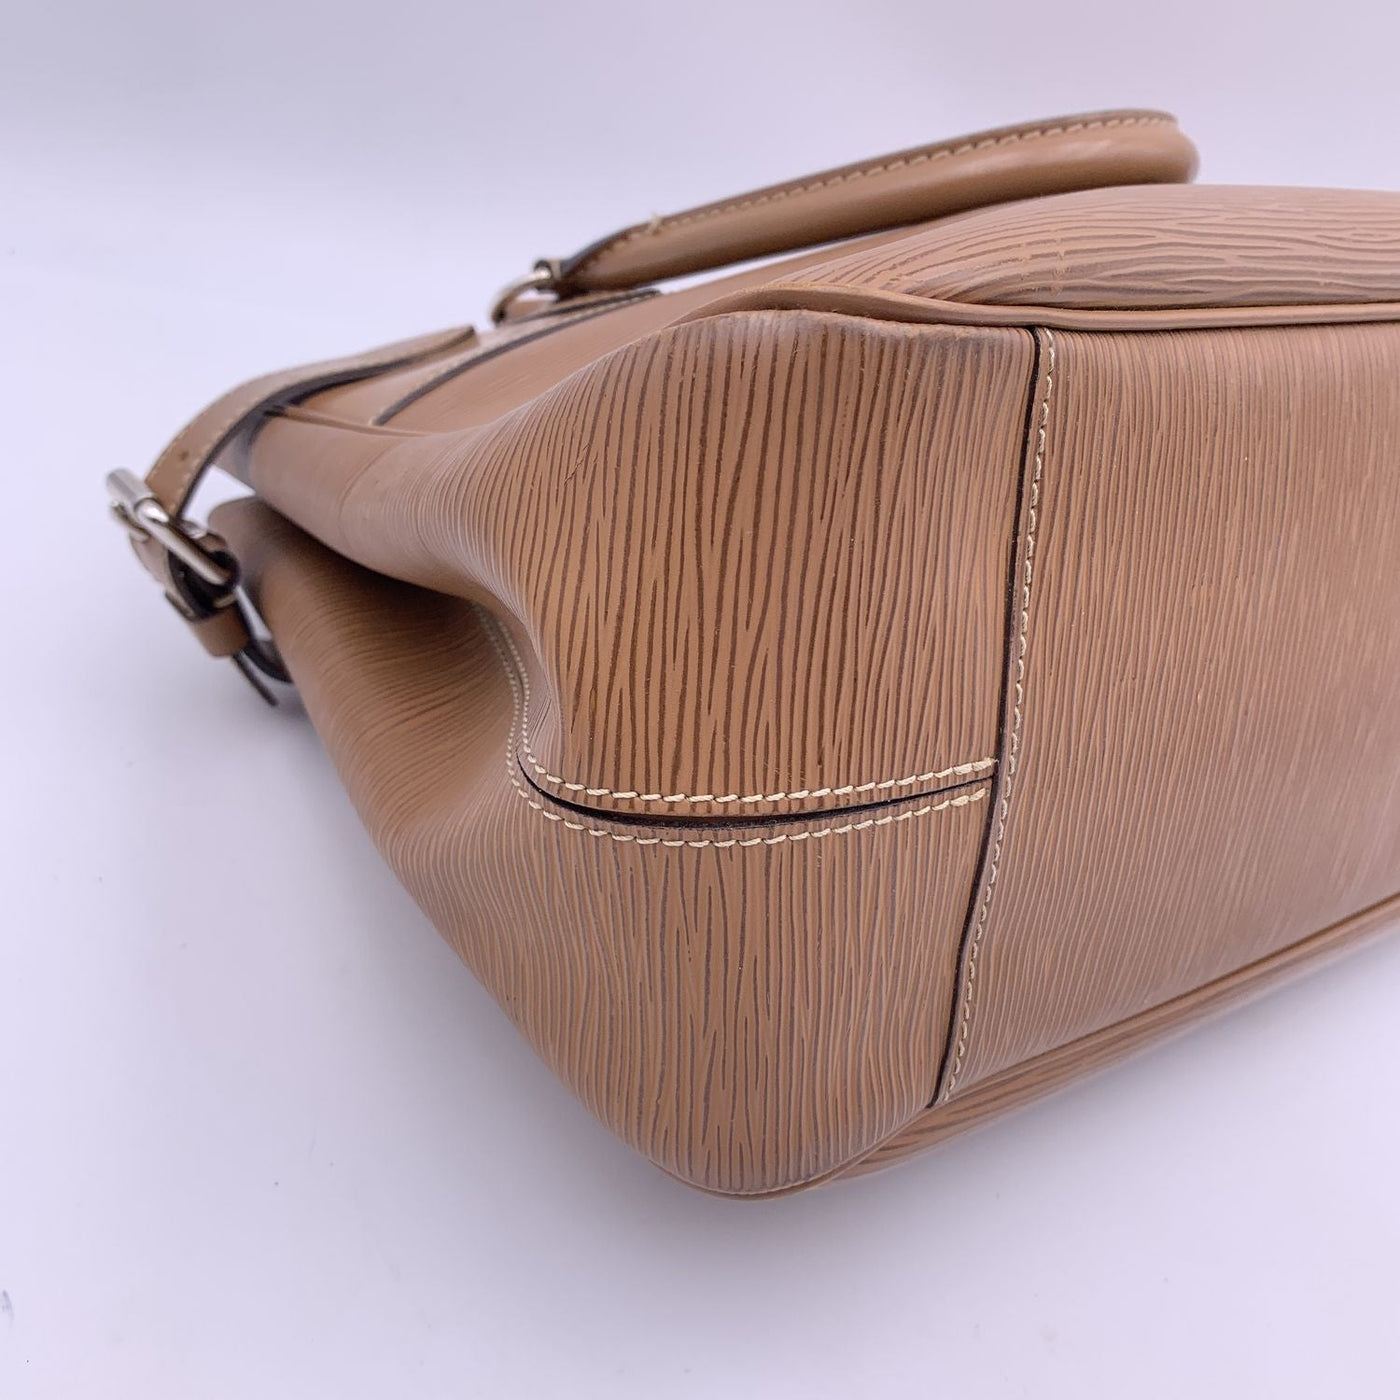 Pre-Owned Louis Vuitton Passy PM Epi Tote Bag - Excellent